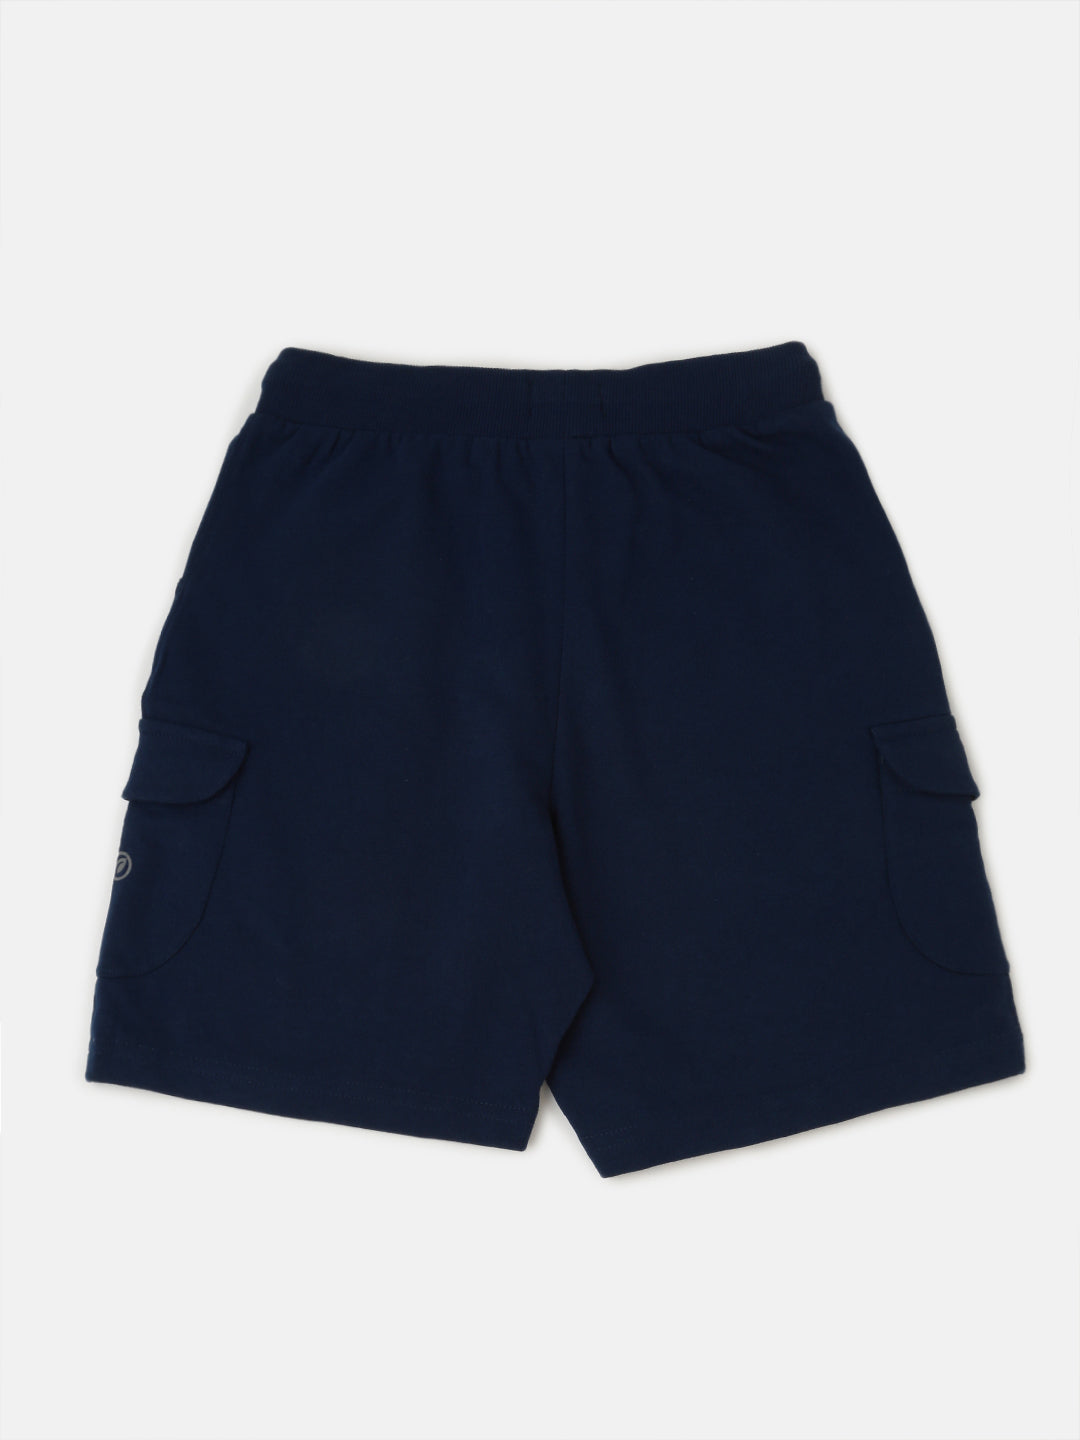 Kids - Boys Shorts Navy Blue